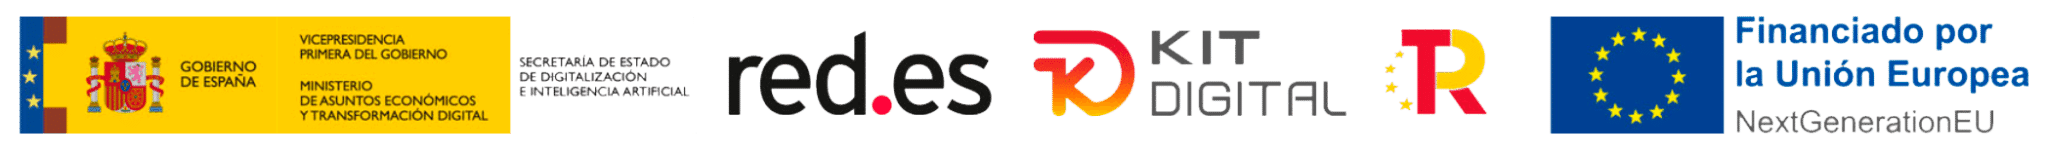 Logos Kit digital